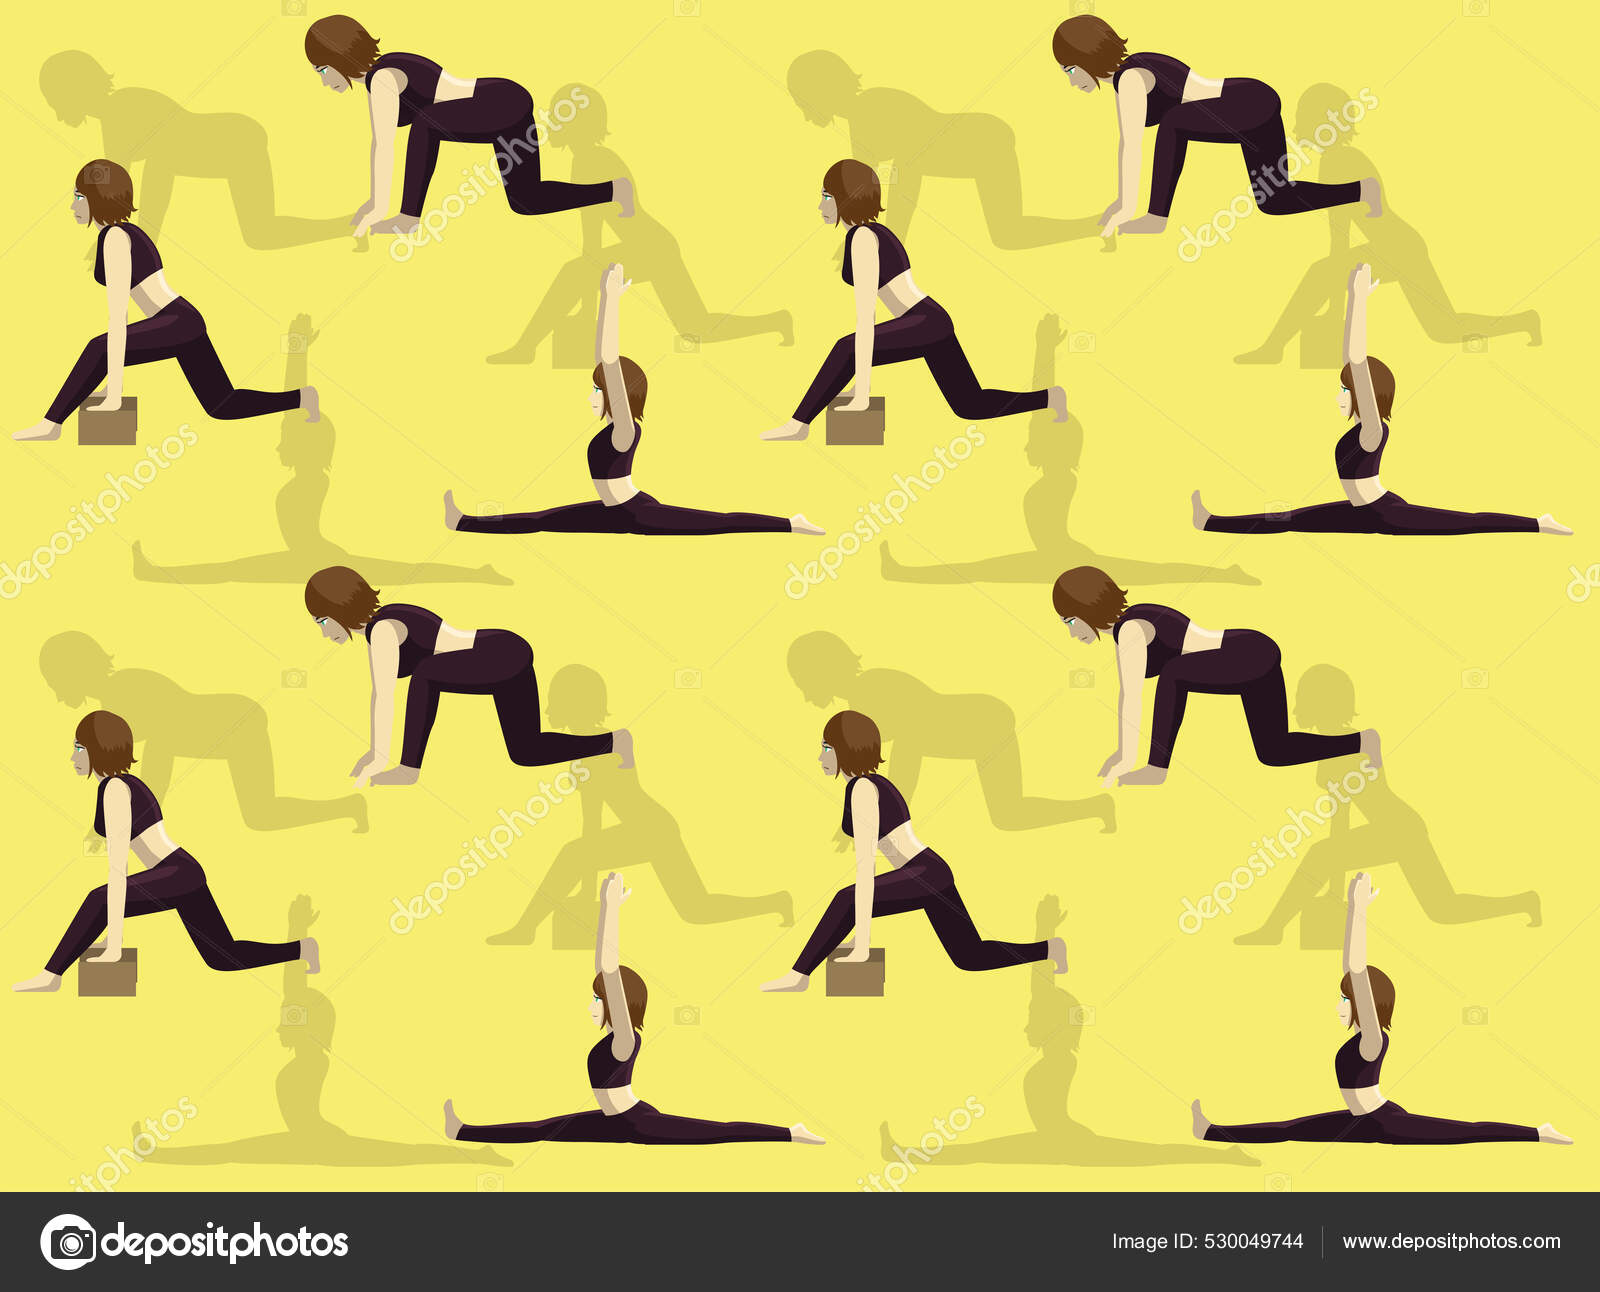 200+] Yoga Wallpapers | Wallpapers.com